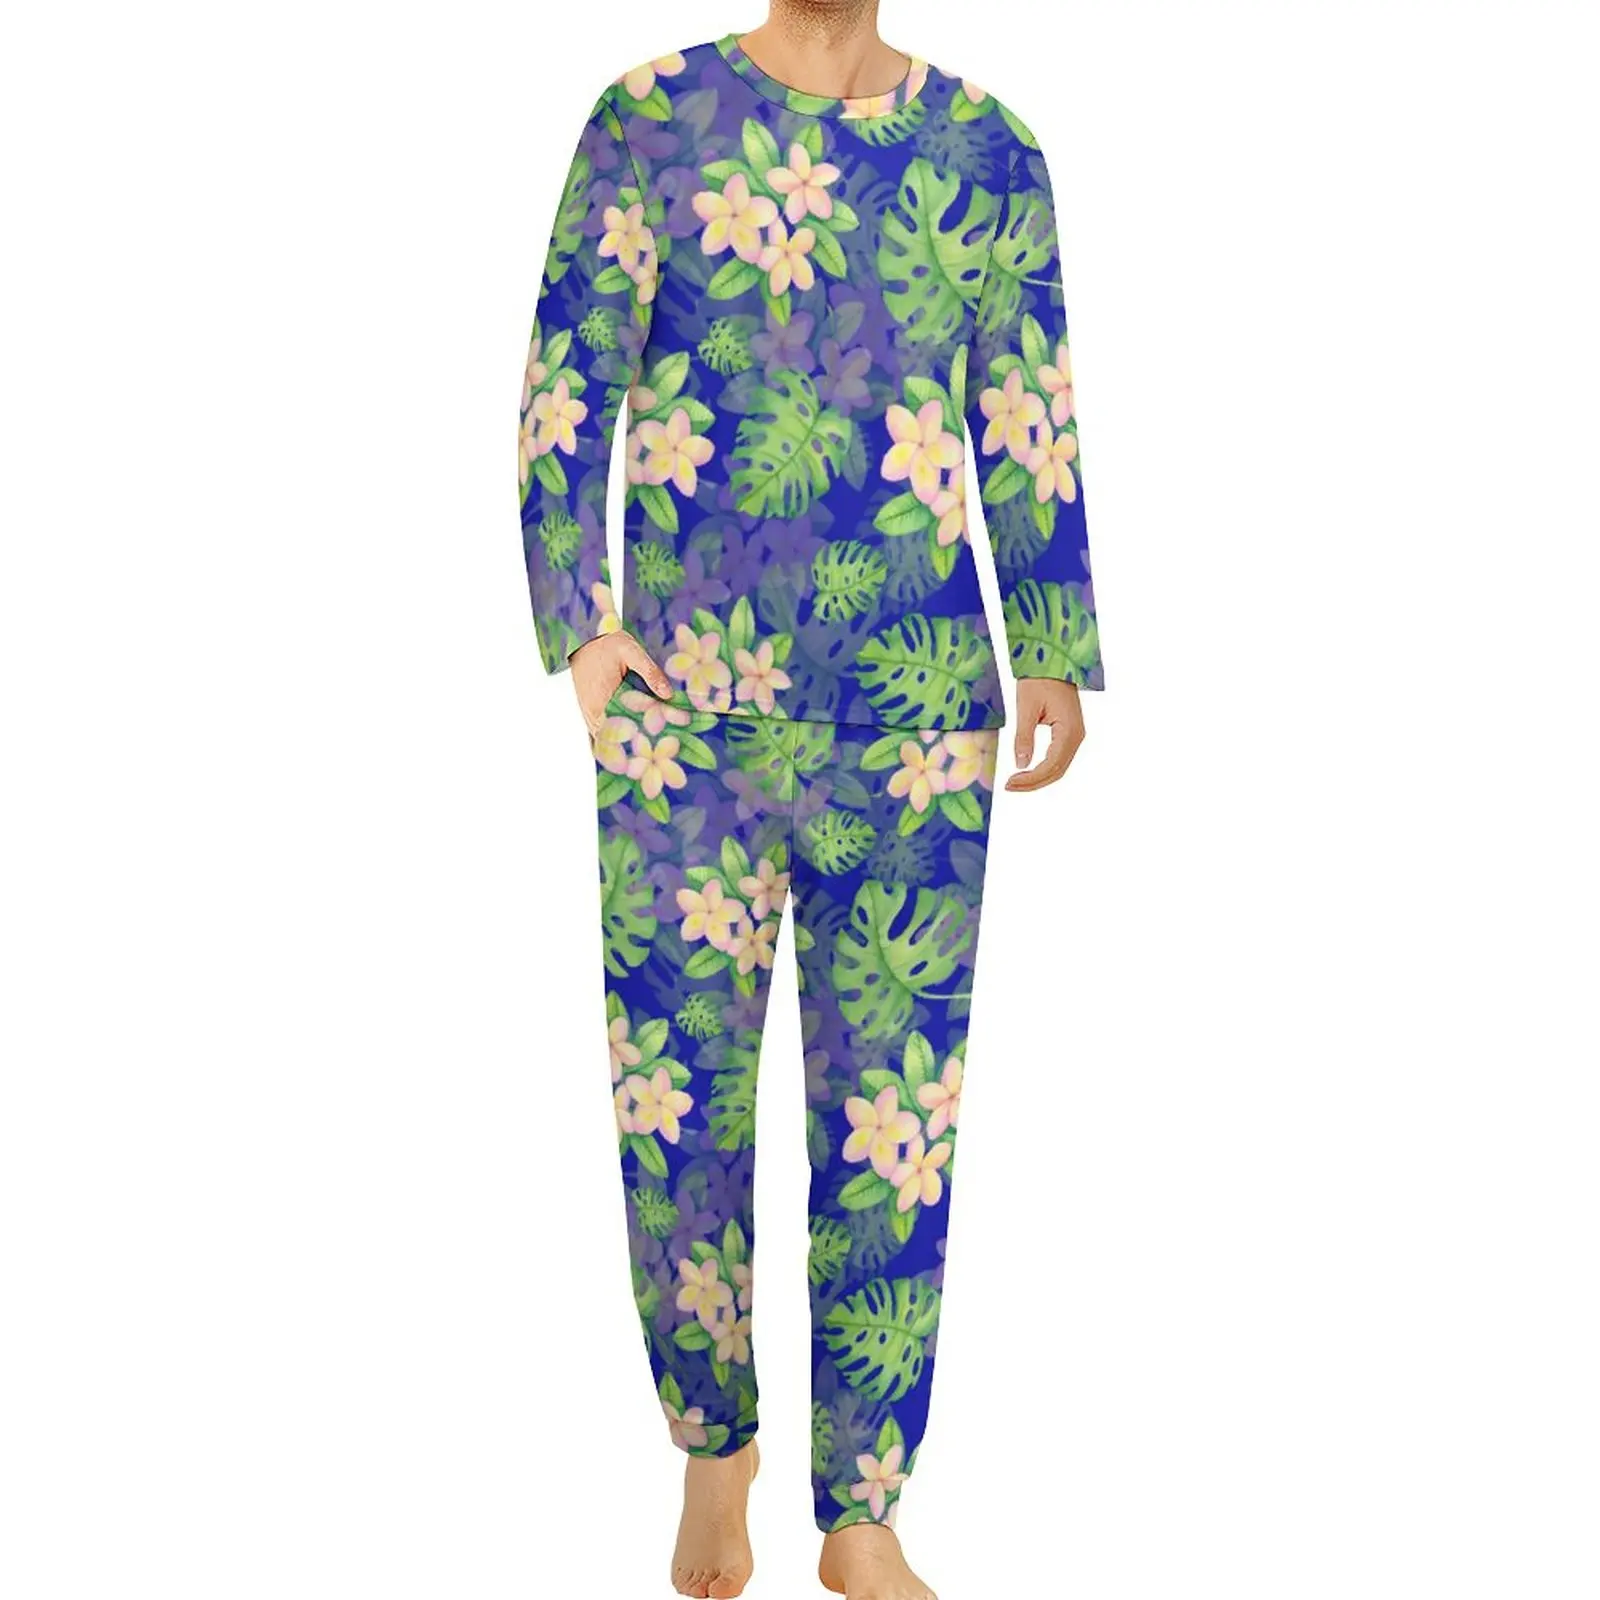 Tropical Palm Leaves Pajamas Daily Flower Print Bedroom Sleepwear Male 2 Piece Graphic Long-Sleeve Cute Big Size Pajama Sets